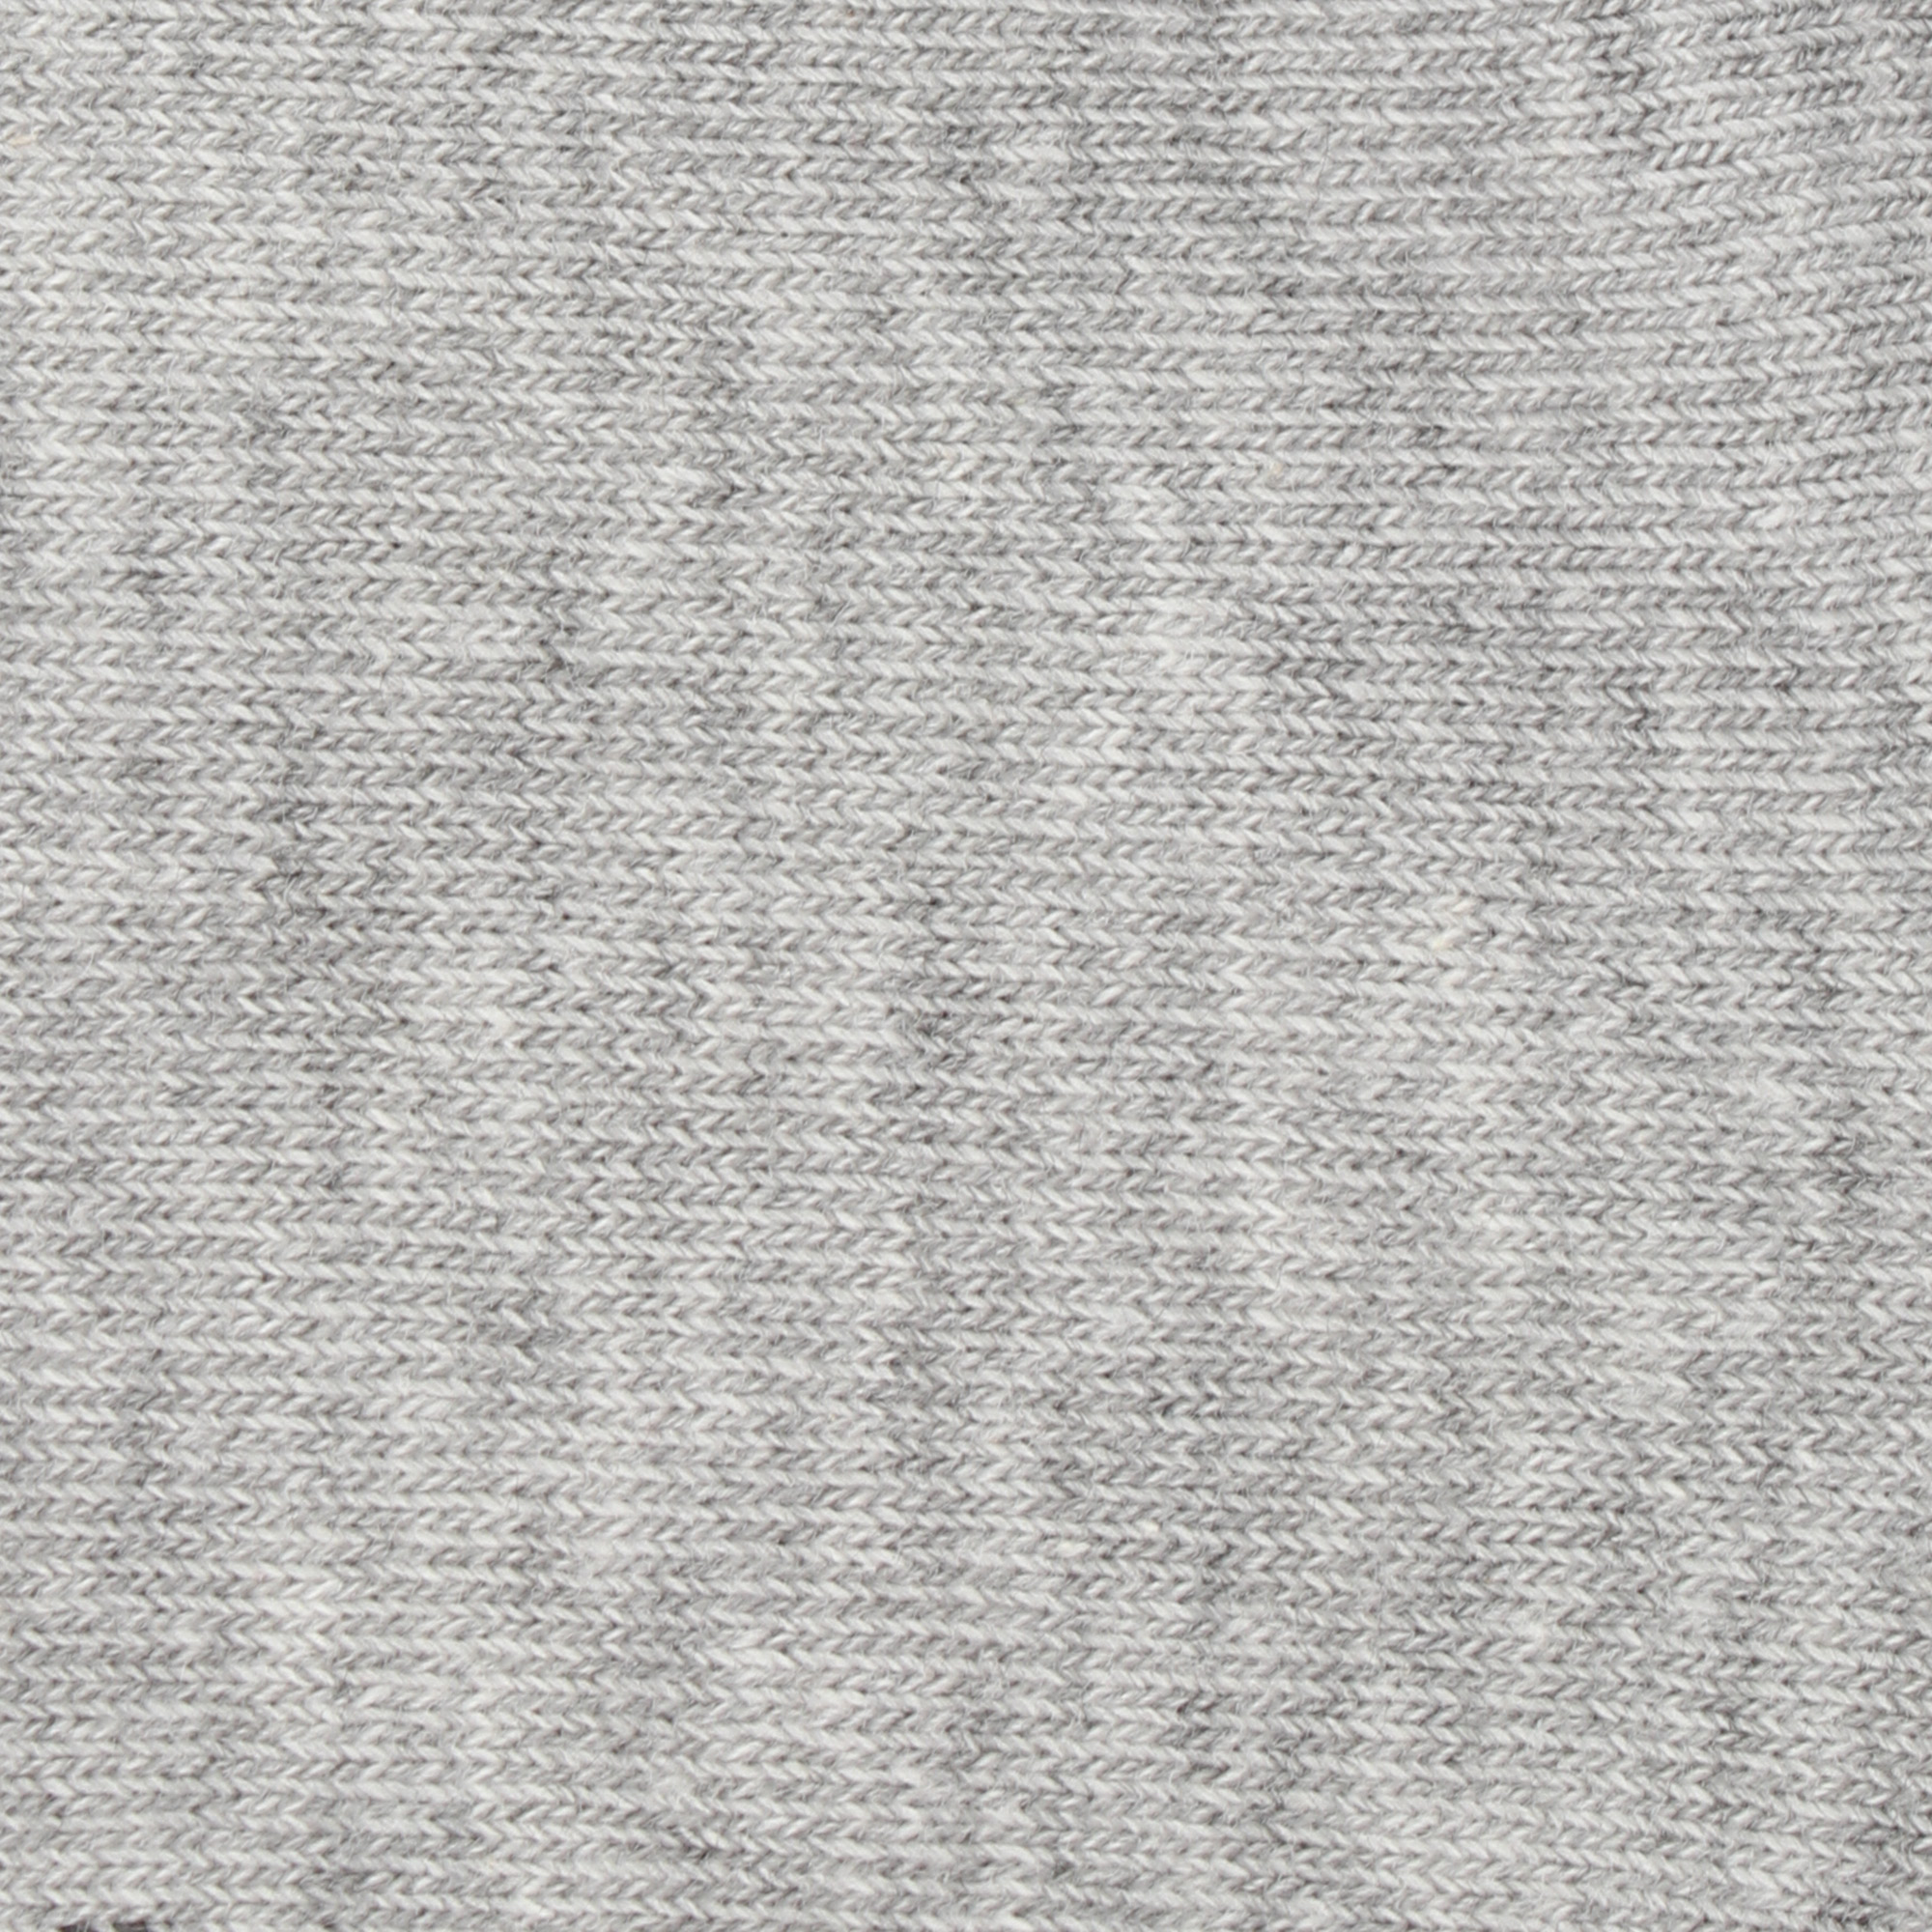 Носки женские Pierre Сardin cr maya светло серый меланж р 23, цвет светло-серый, размер 23 - фото 2